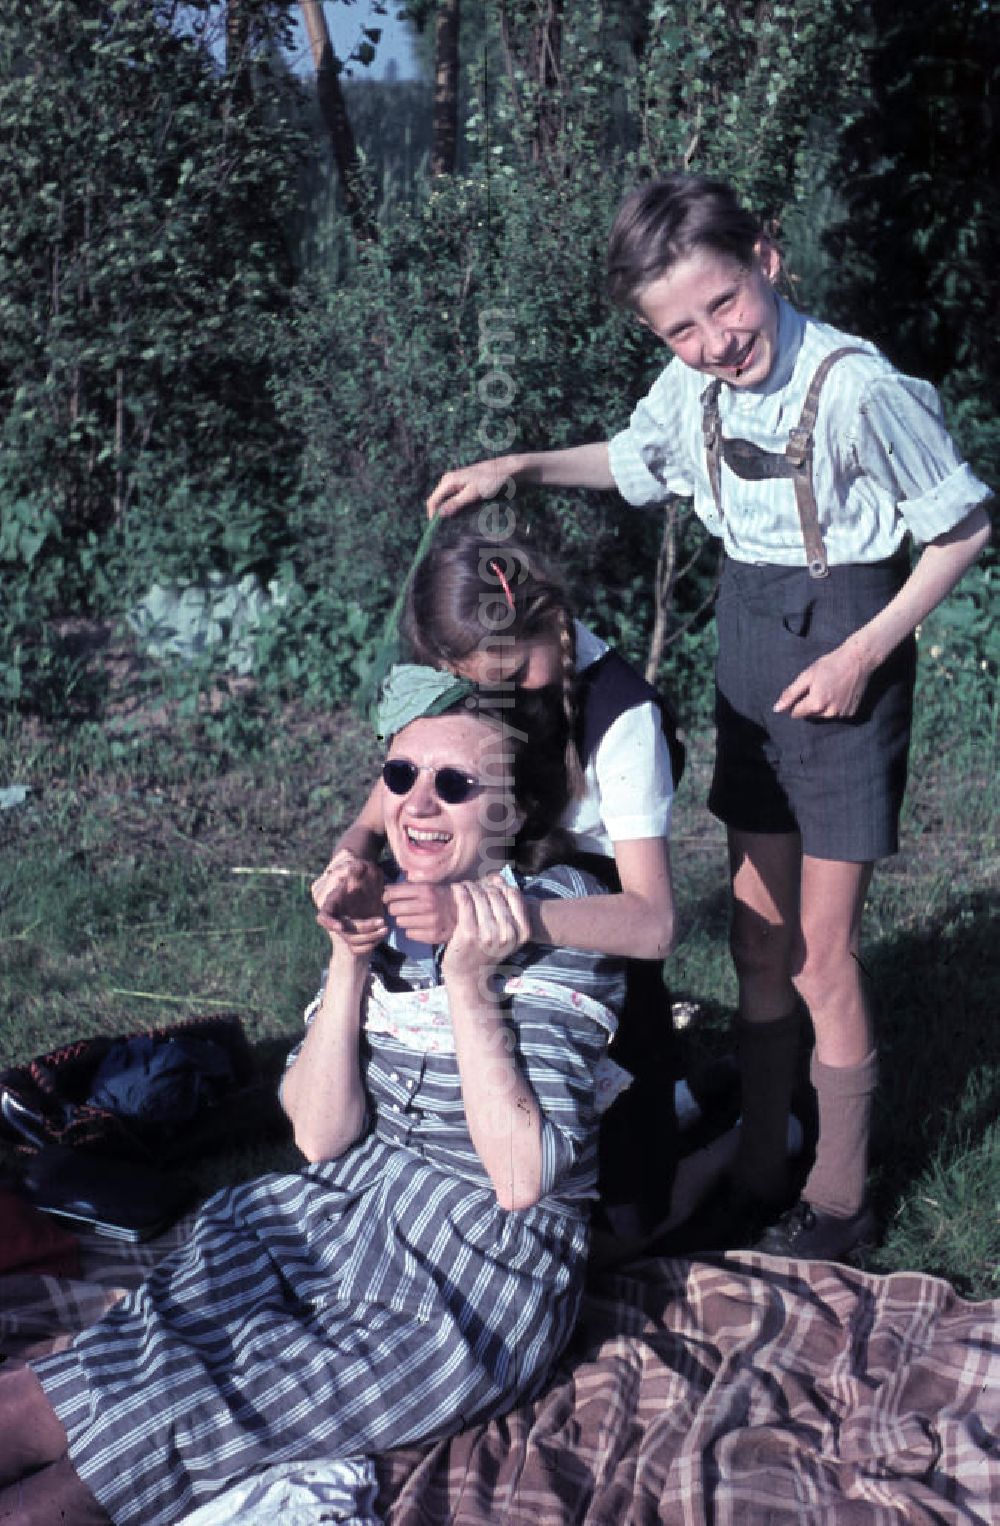 GDR picture archive: Leuna - Familie macht Faxen auf einer Decke im Freibad. Family make grimaces on a blanket in the open-air bath.